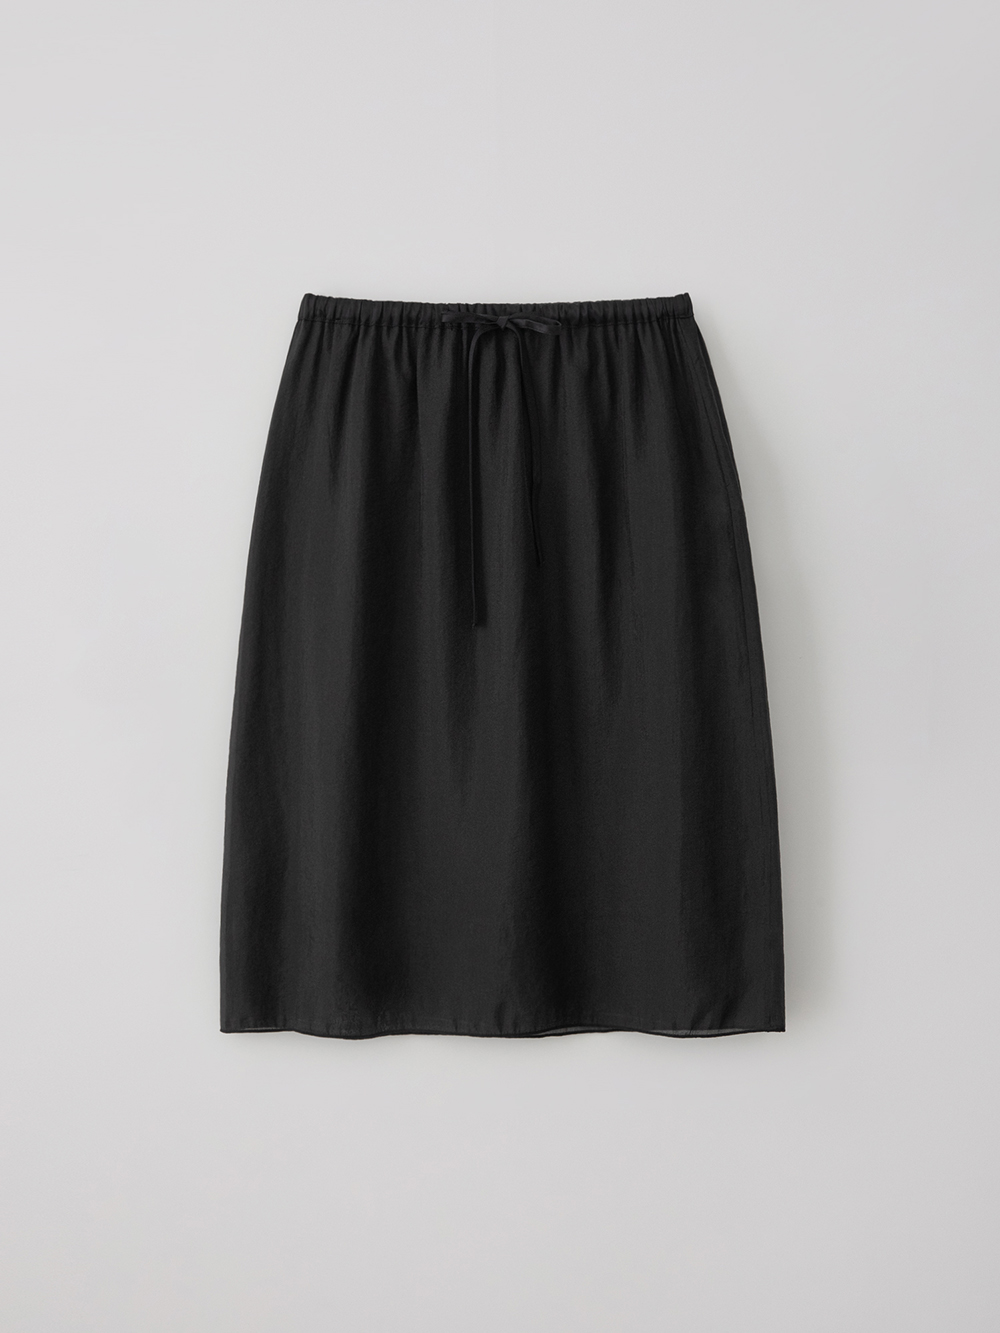 Reversible layered skirt (black)